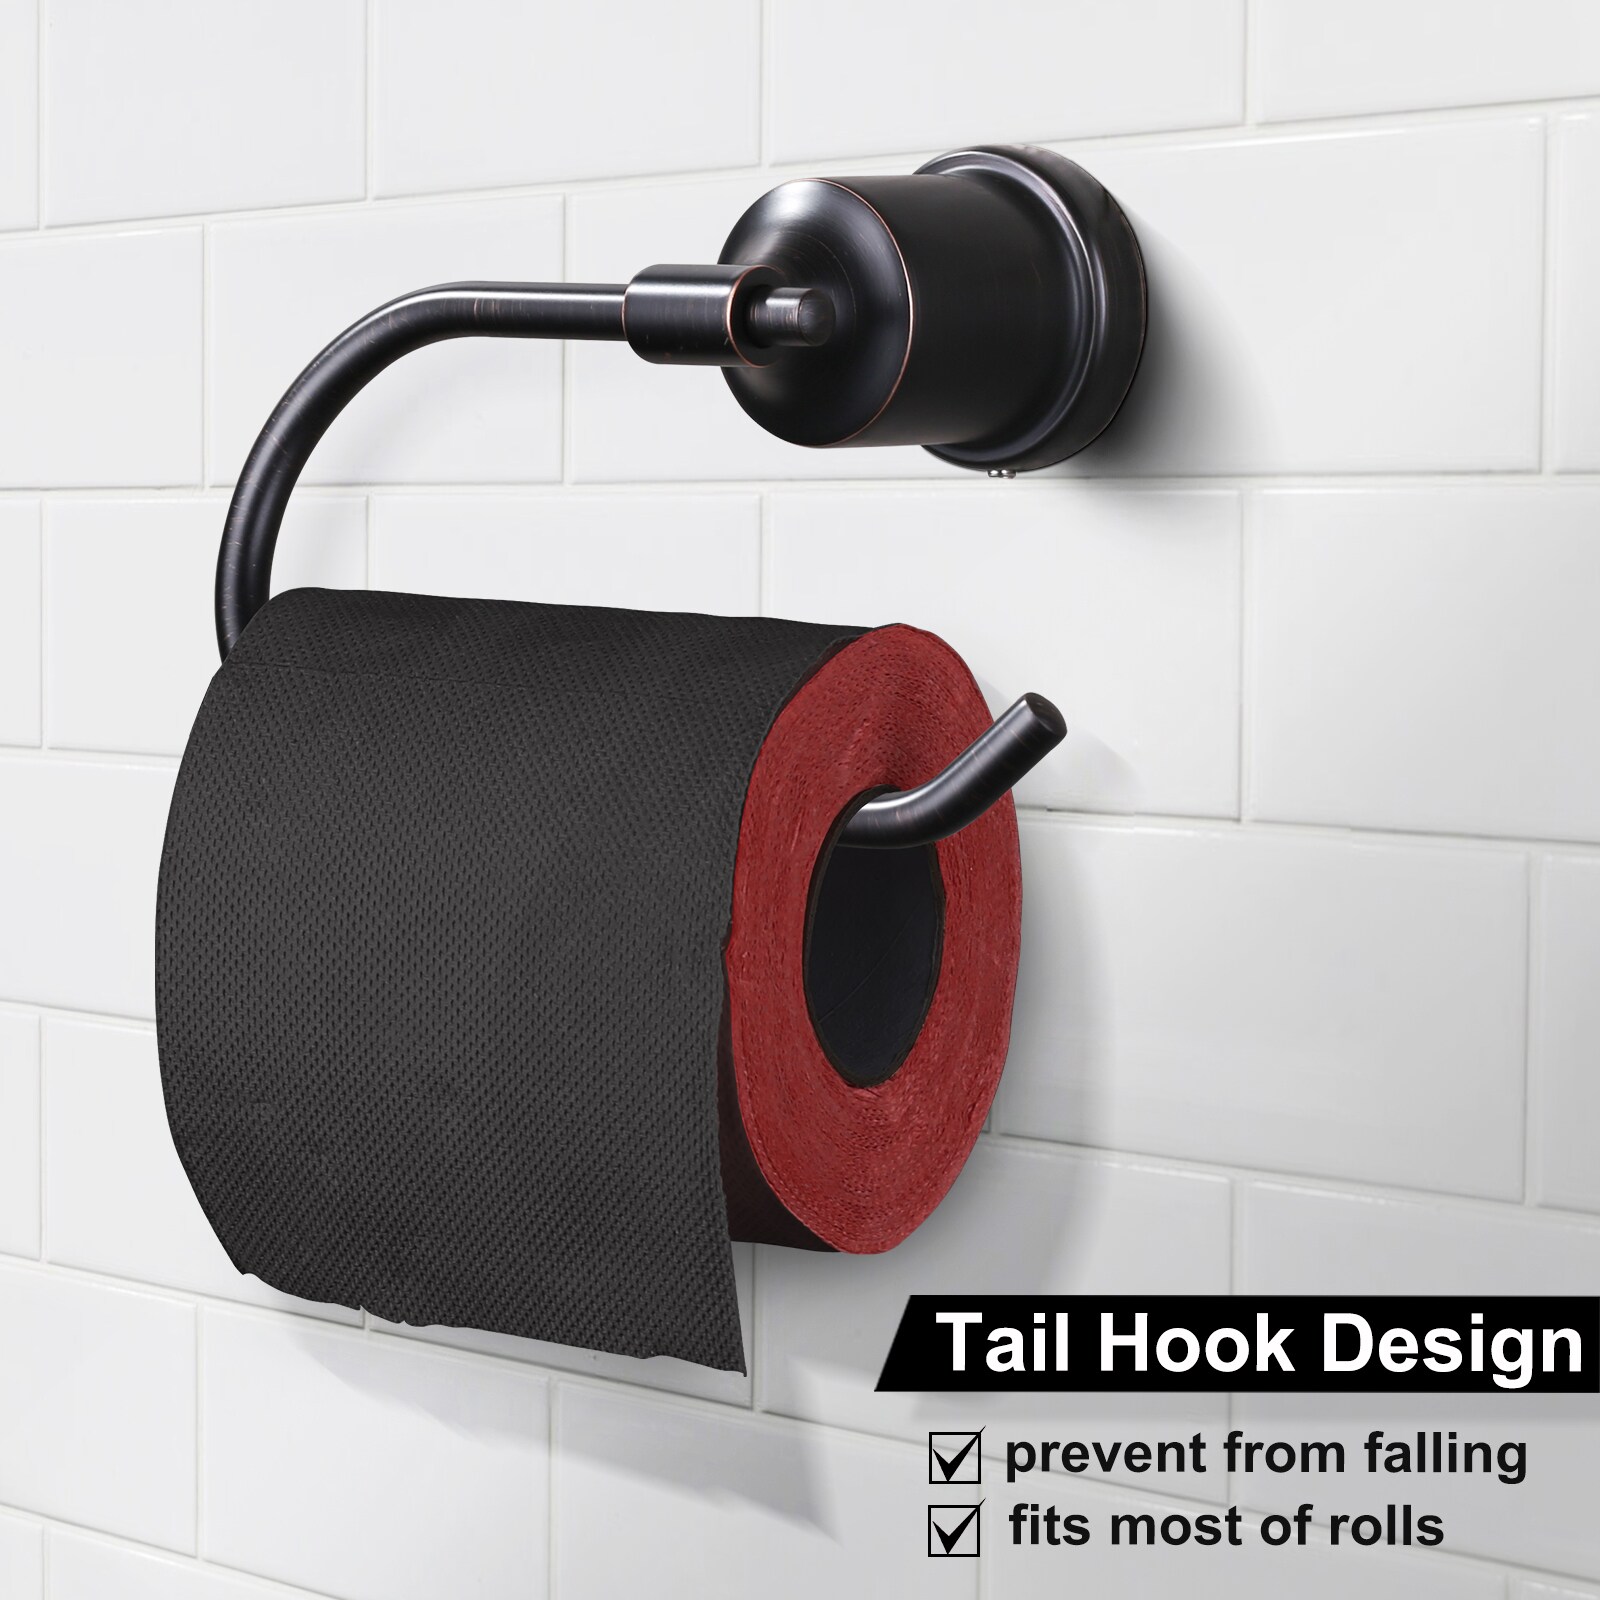 WOWOW Bathroom Toilet Paper Holder, 304 Stainless Steel Bath Toilet Tissue Holder Wall Mount, Matte Black